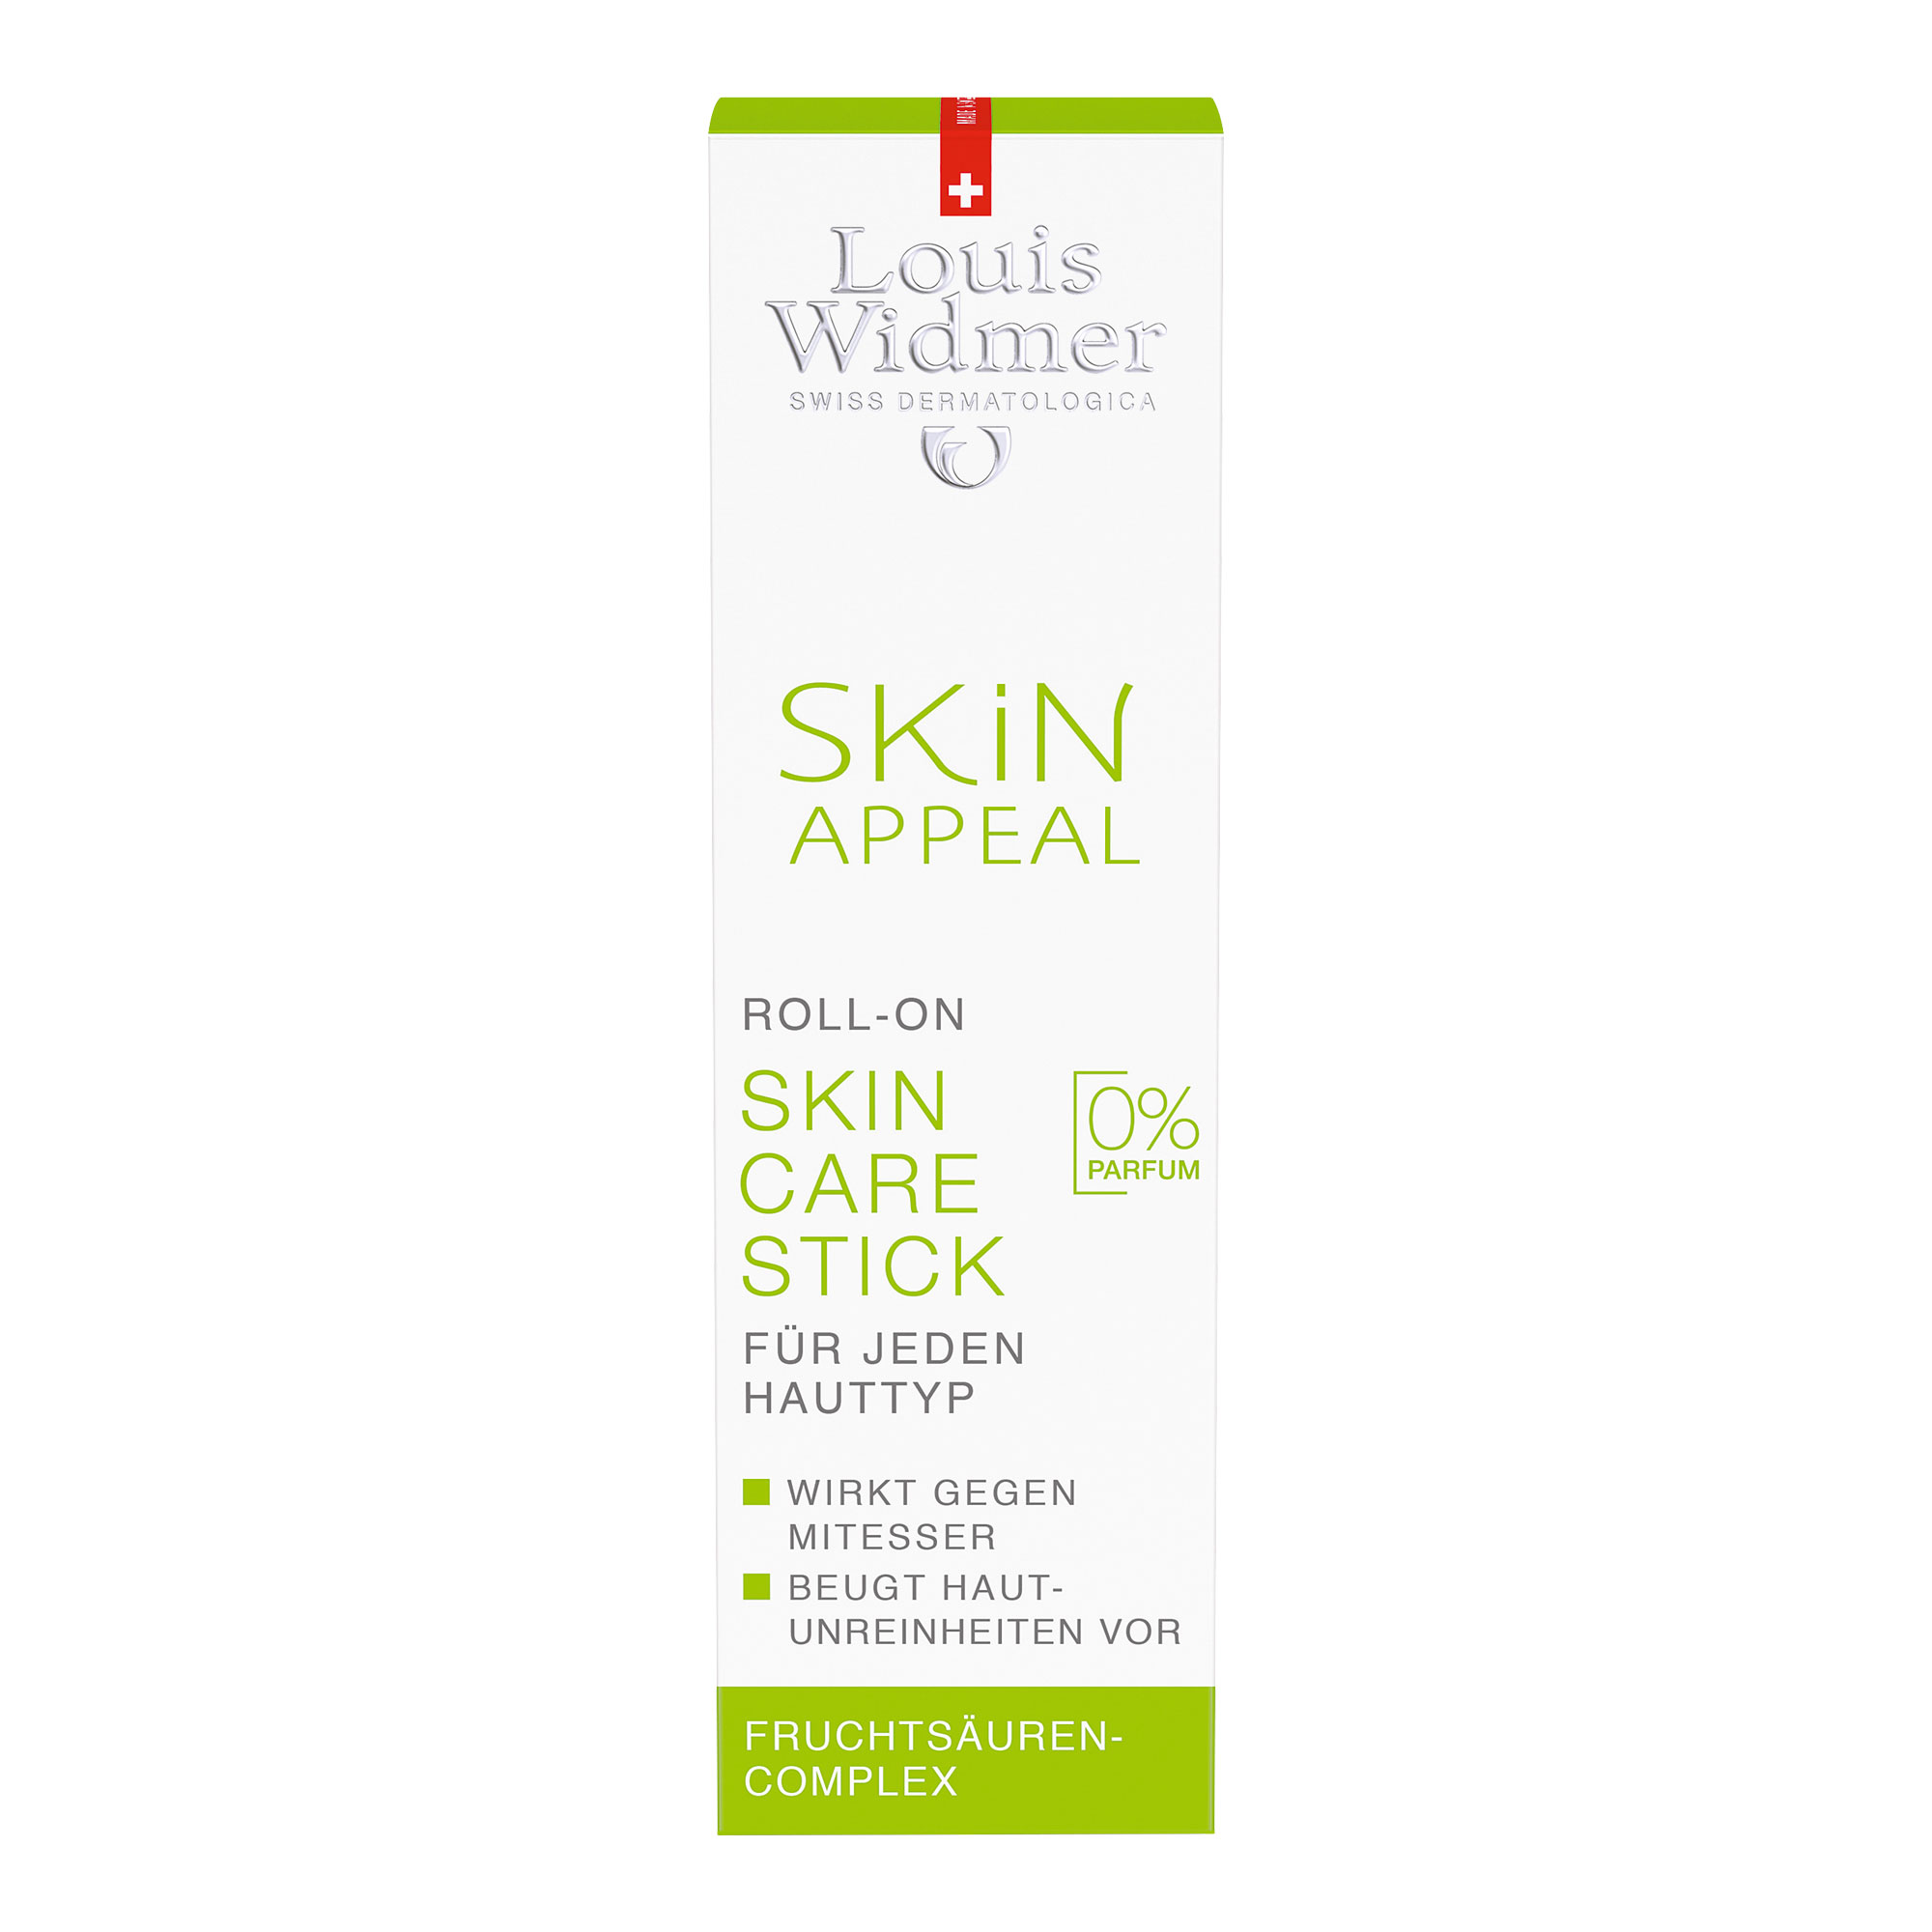 Widmer Skin Appeal Skin Care Stick unparfümiert